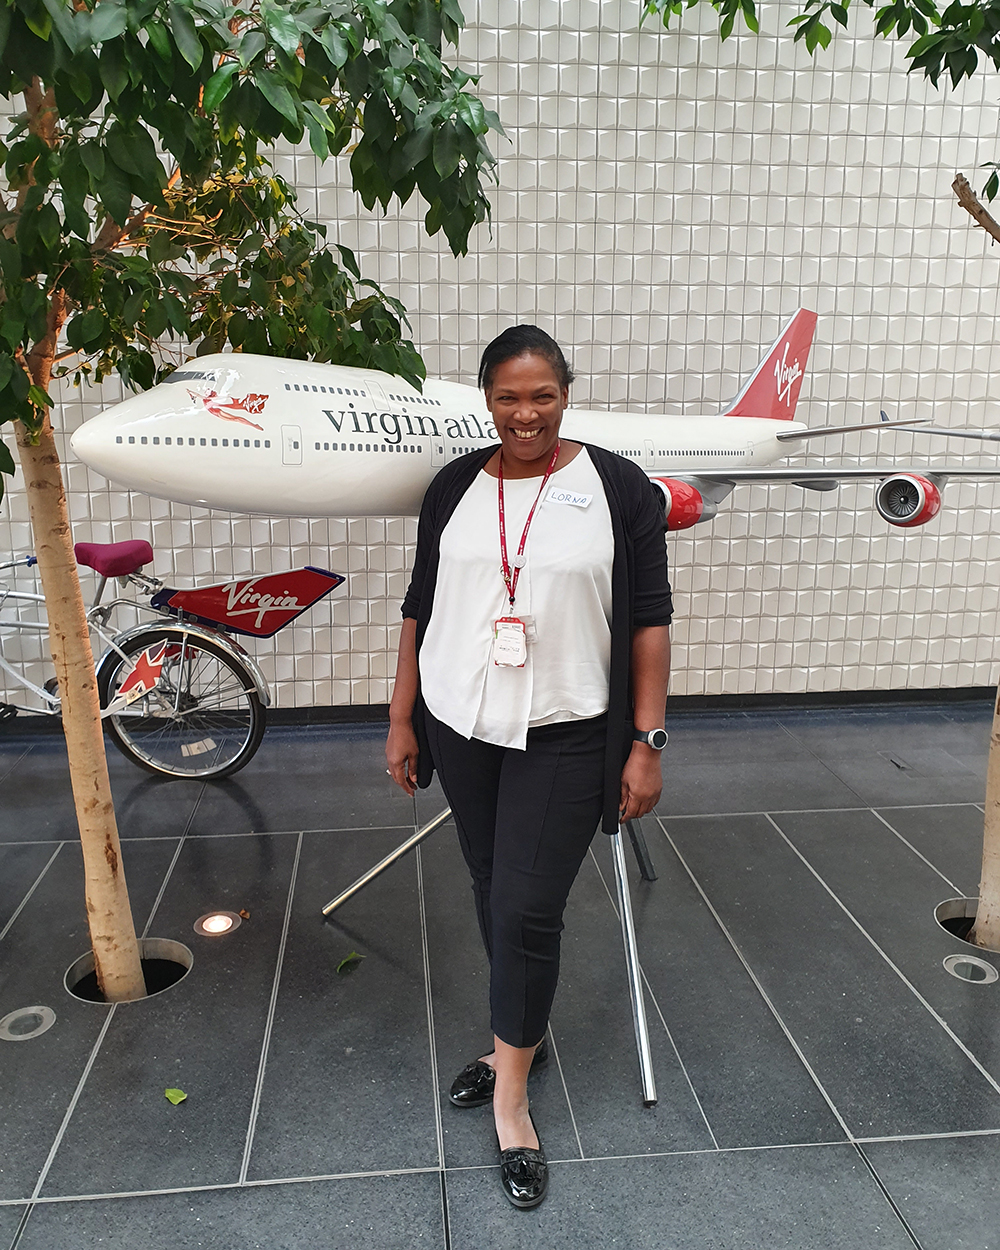 Lorna - Cabin Crew for Virgin Atlantic